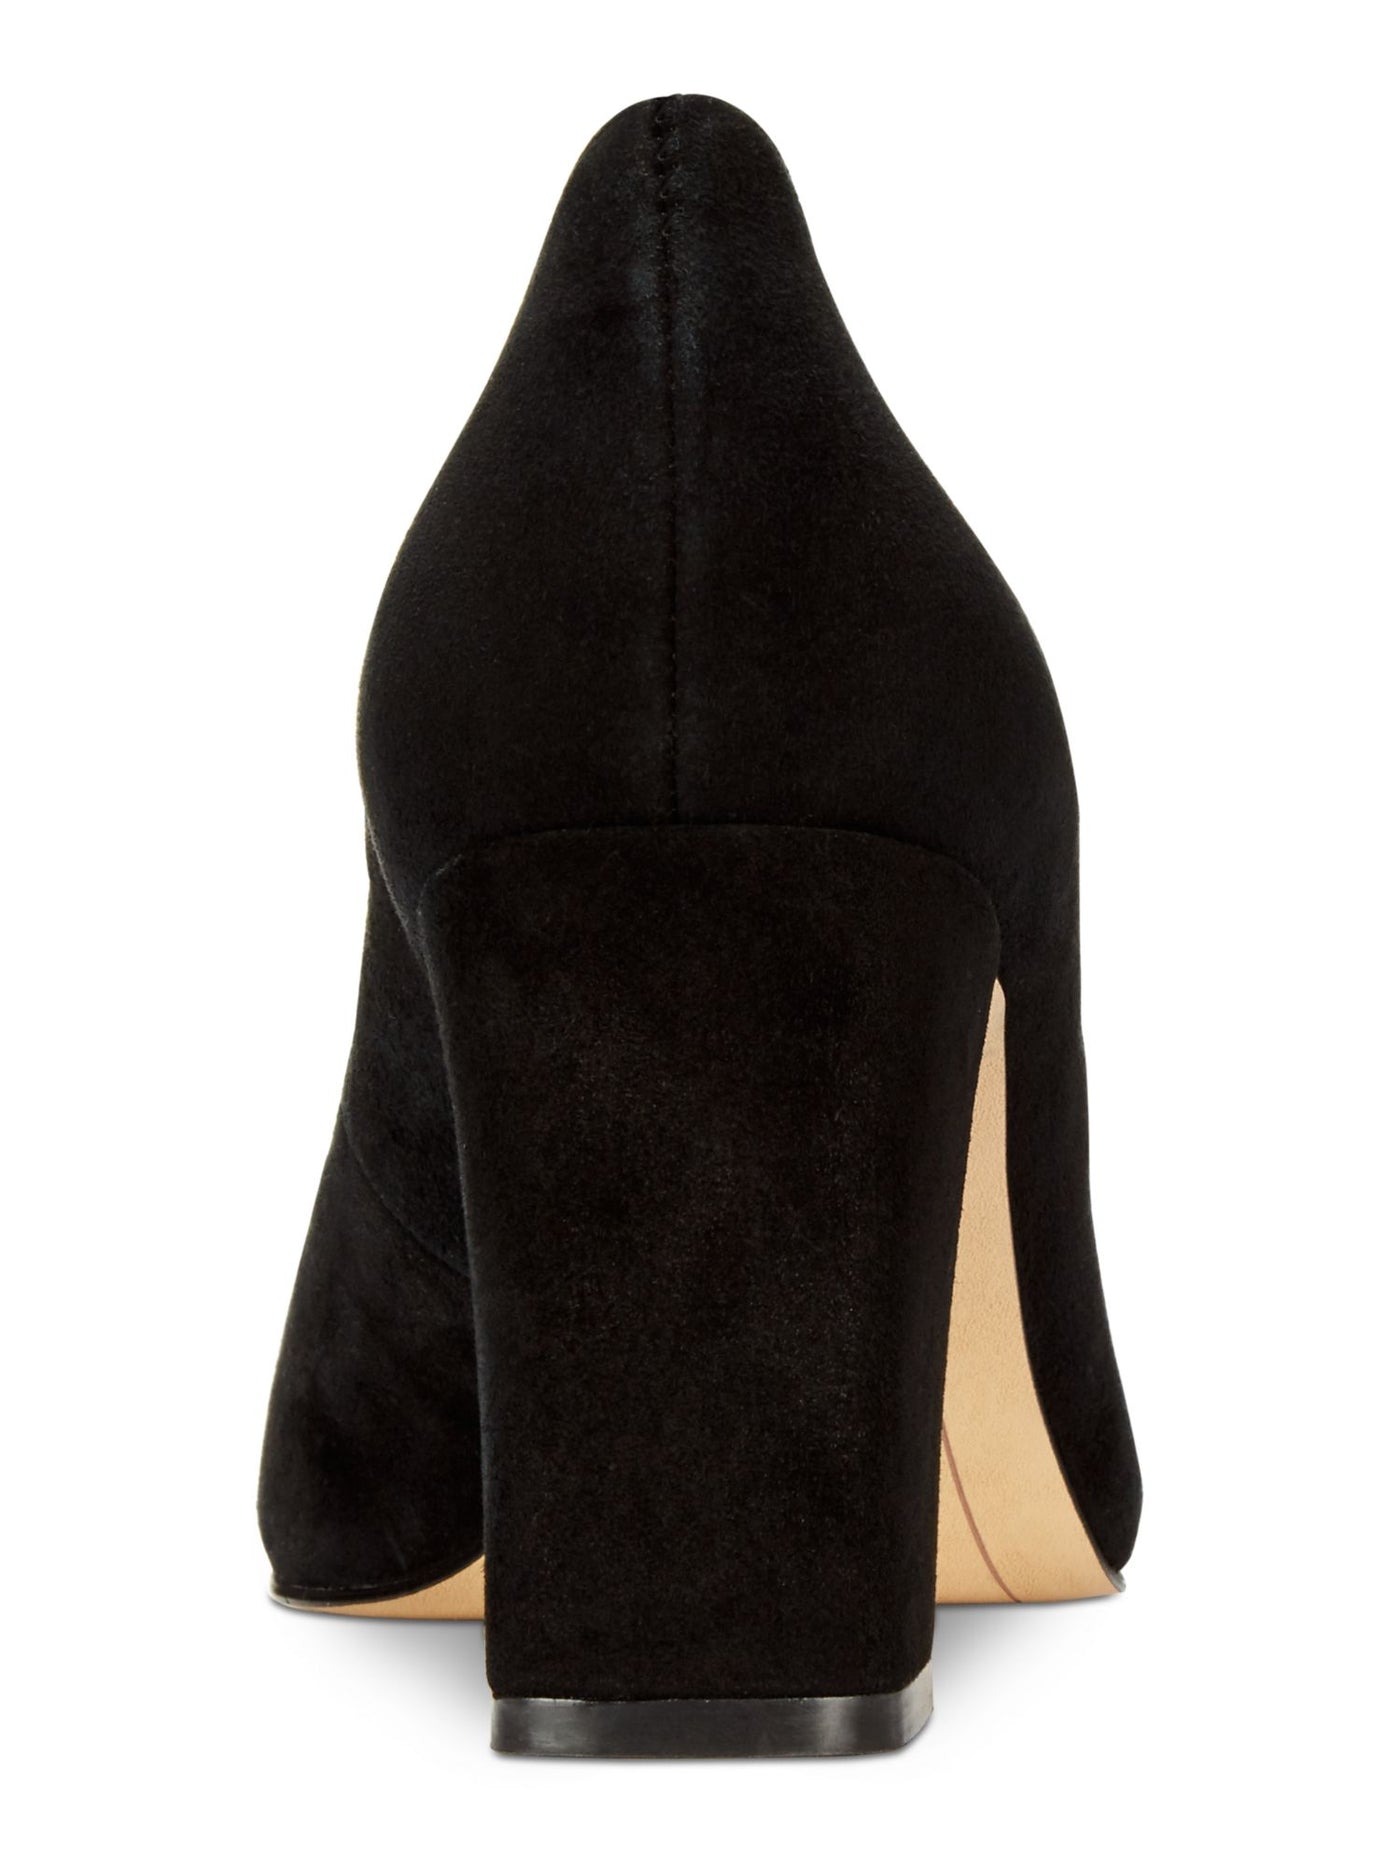 INC Womens Black Comfort Bahira Pointed Toe Block Heel Slip On Leather Dress Pumps Shoes 9 M